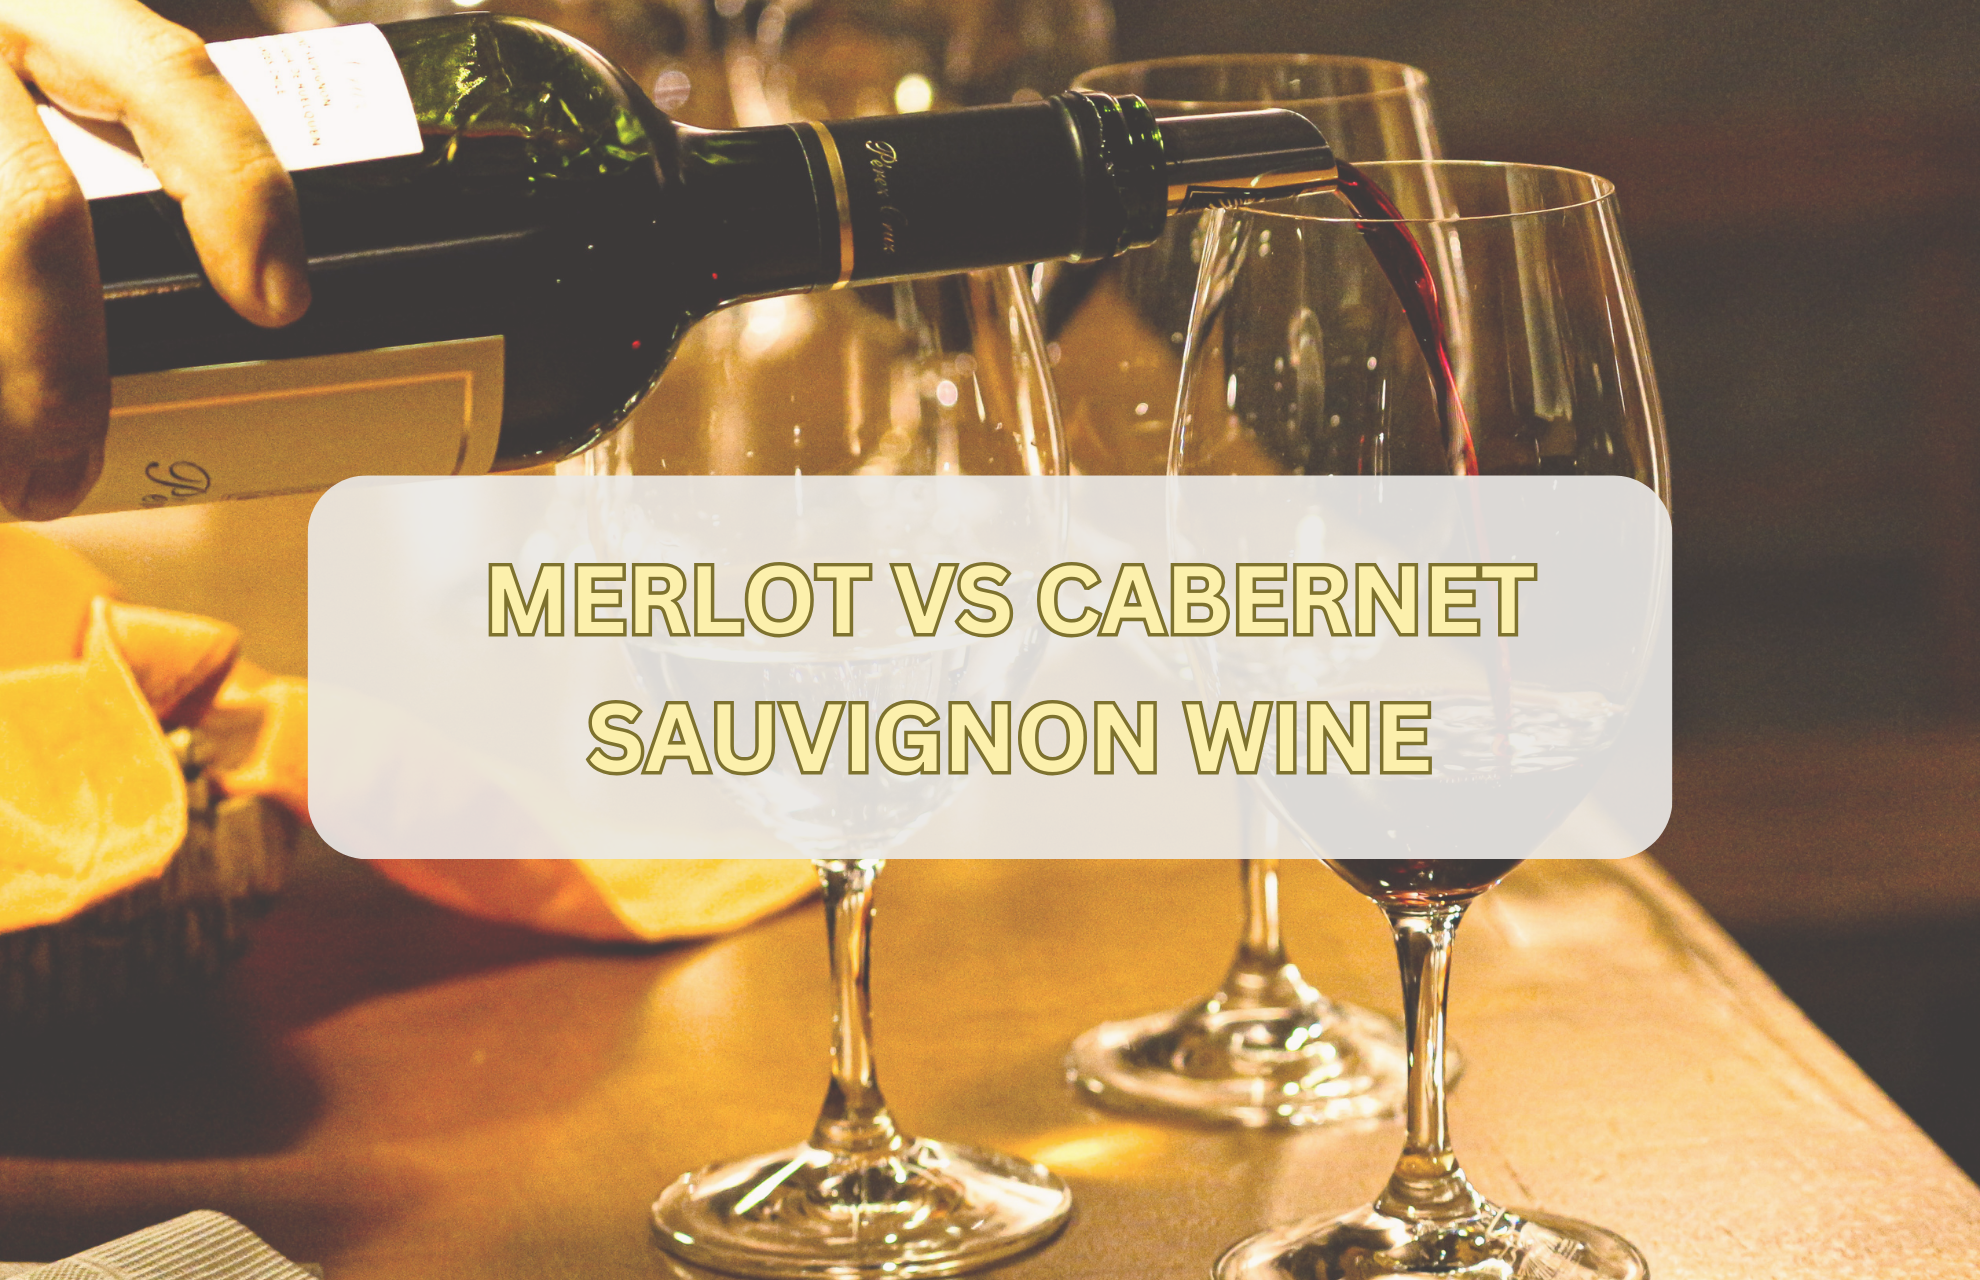 MERLOT VS CABERNET SAUVIGNON WINE